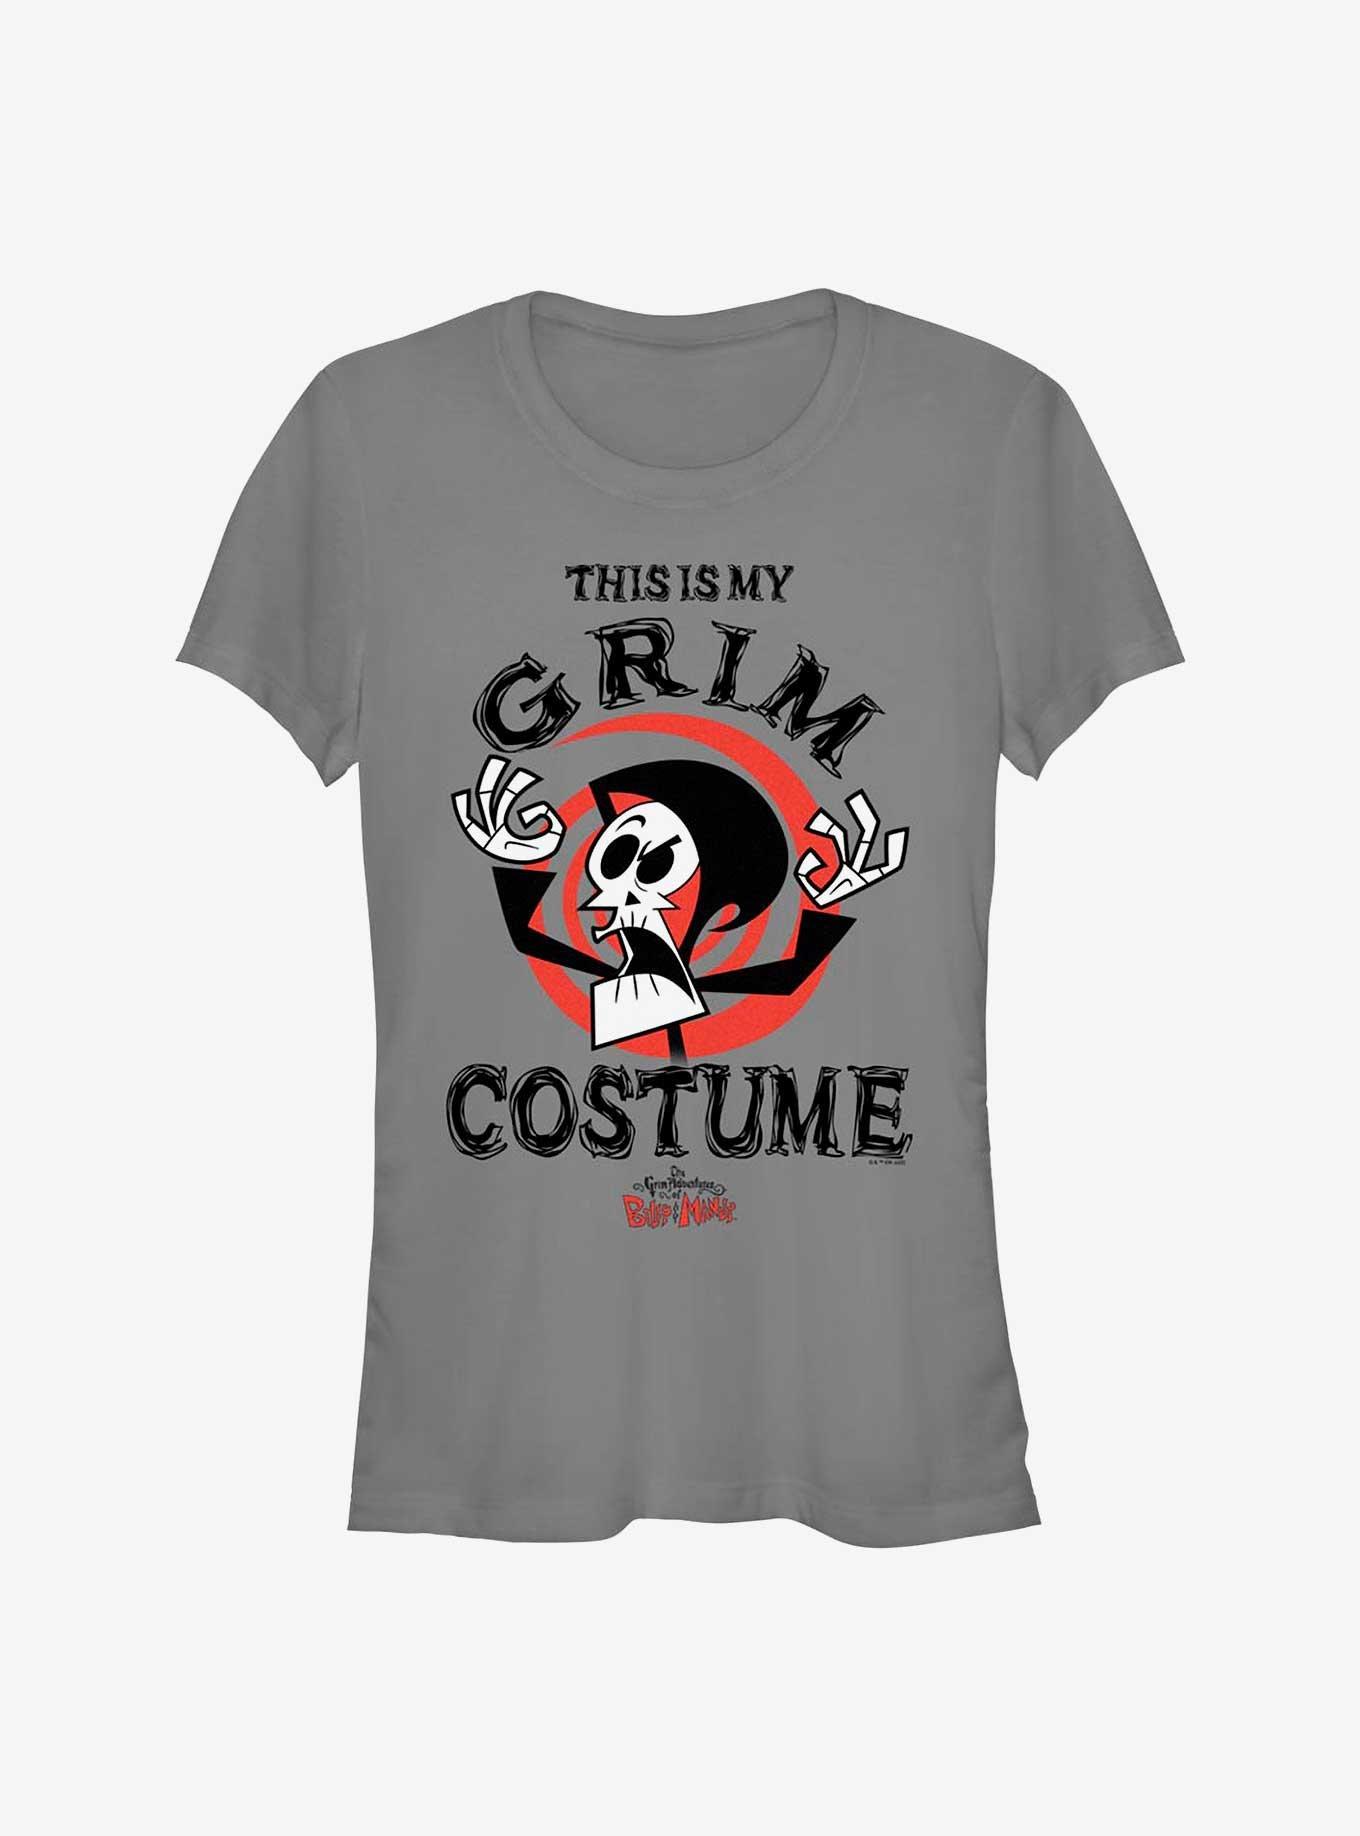 Cartoon Network The Grim Adventures of Billy & Mandy My Grim Costume Girls T-Shirt, CHARCOAL, hi-res